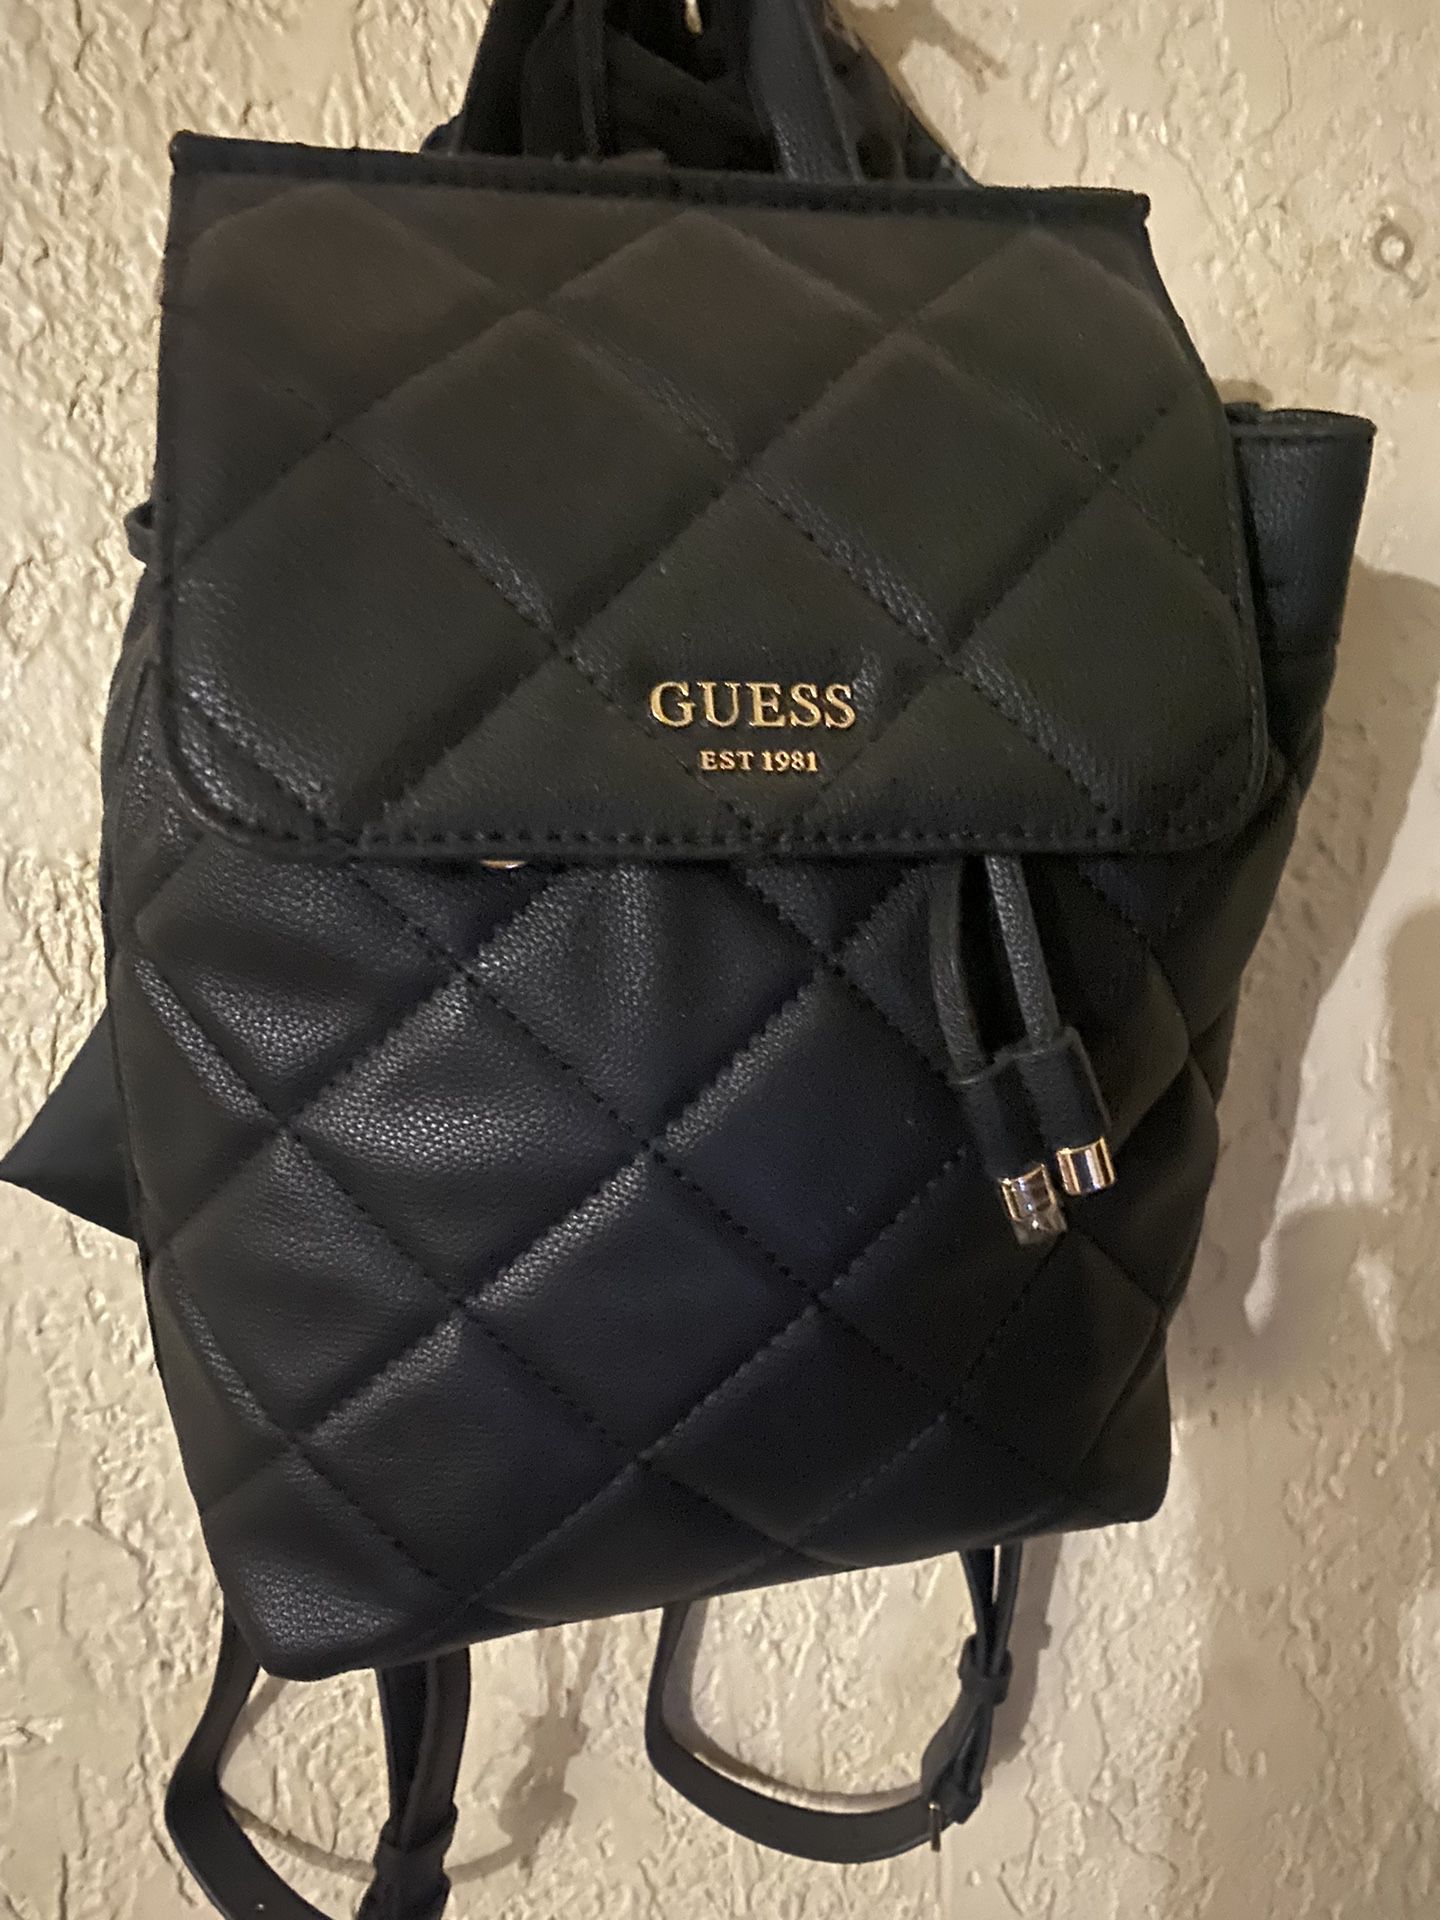 New Fantine Guess Bag